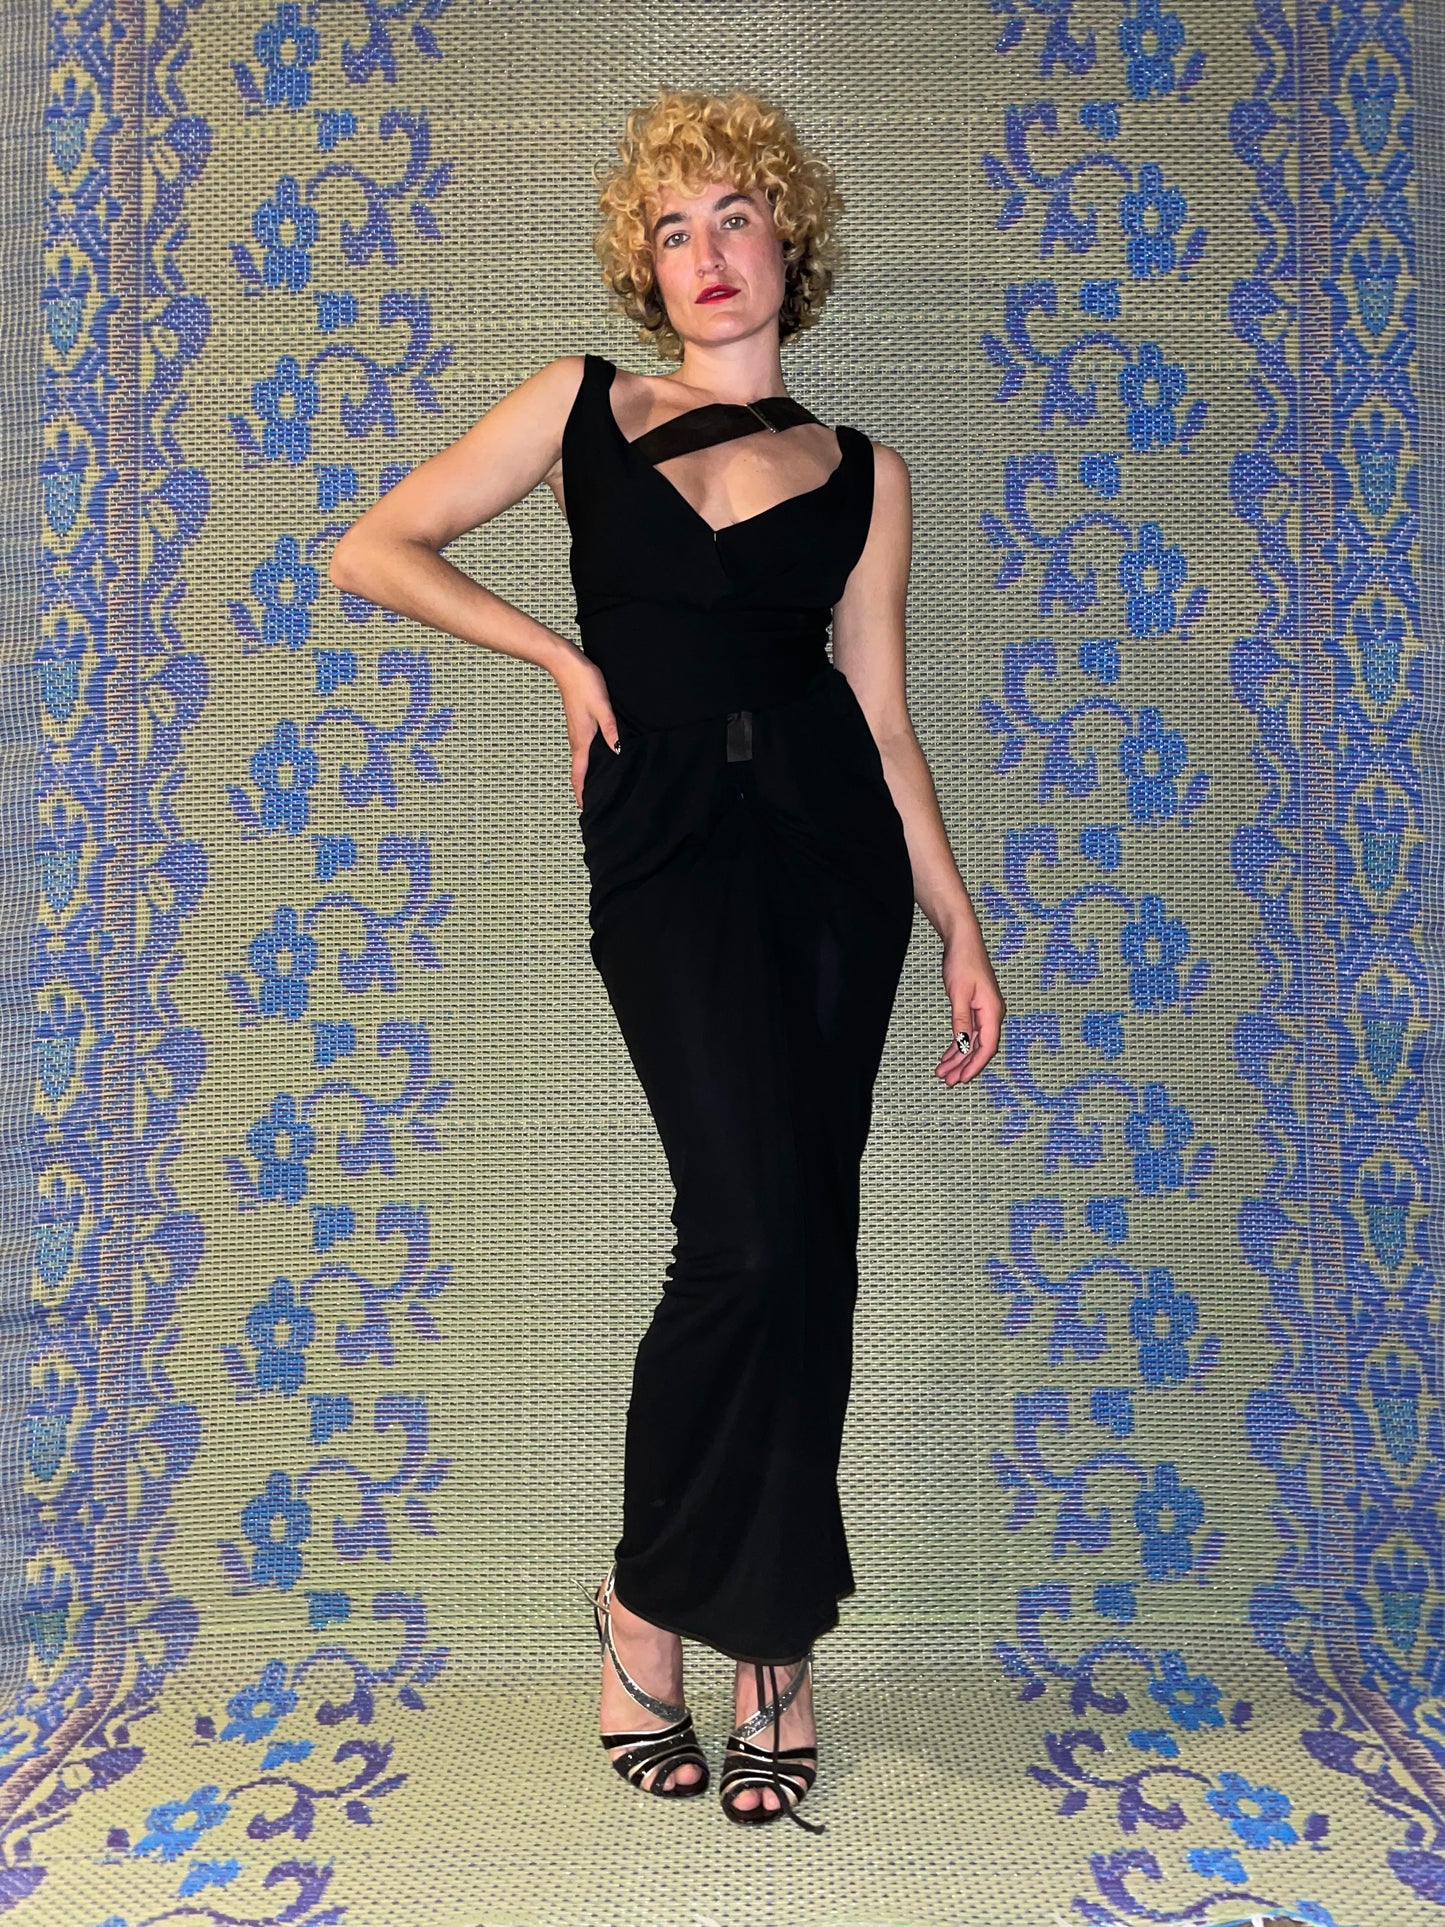 Vivienne Westwood early 2000's black draped evening dress